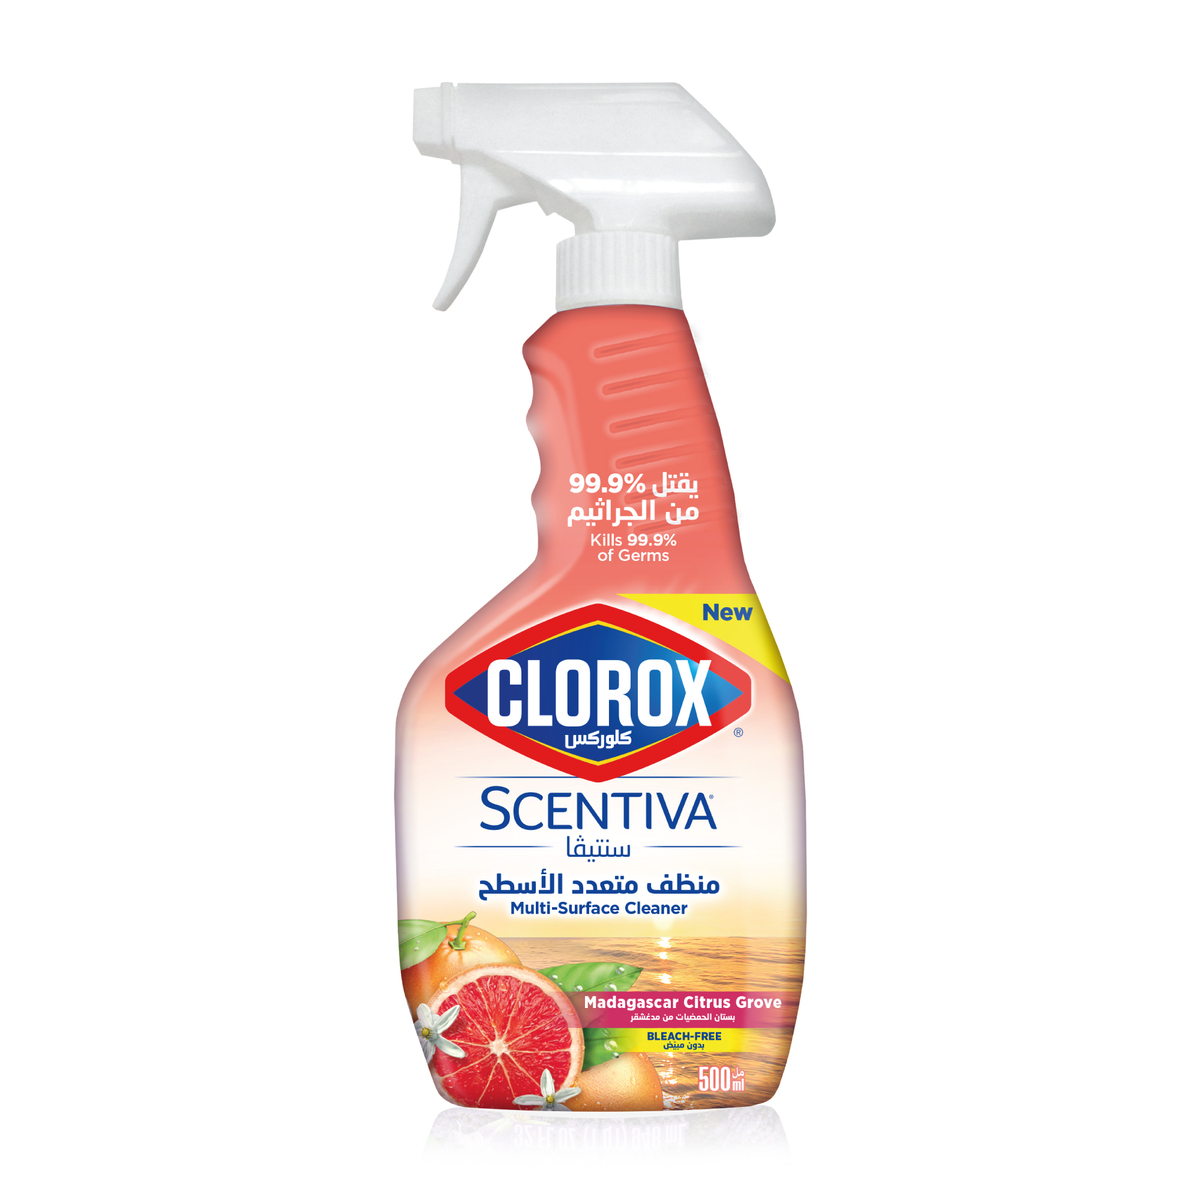 Clorox Scentiva Multi Surface Spray Cleaner Madagascar Citrus Grove Bleach Free 500 ml